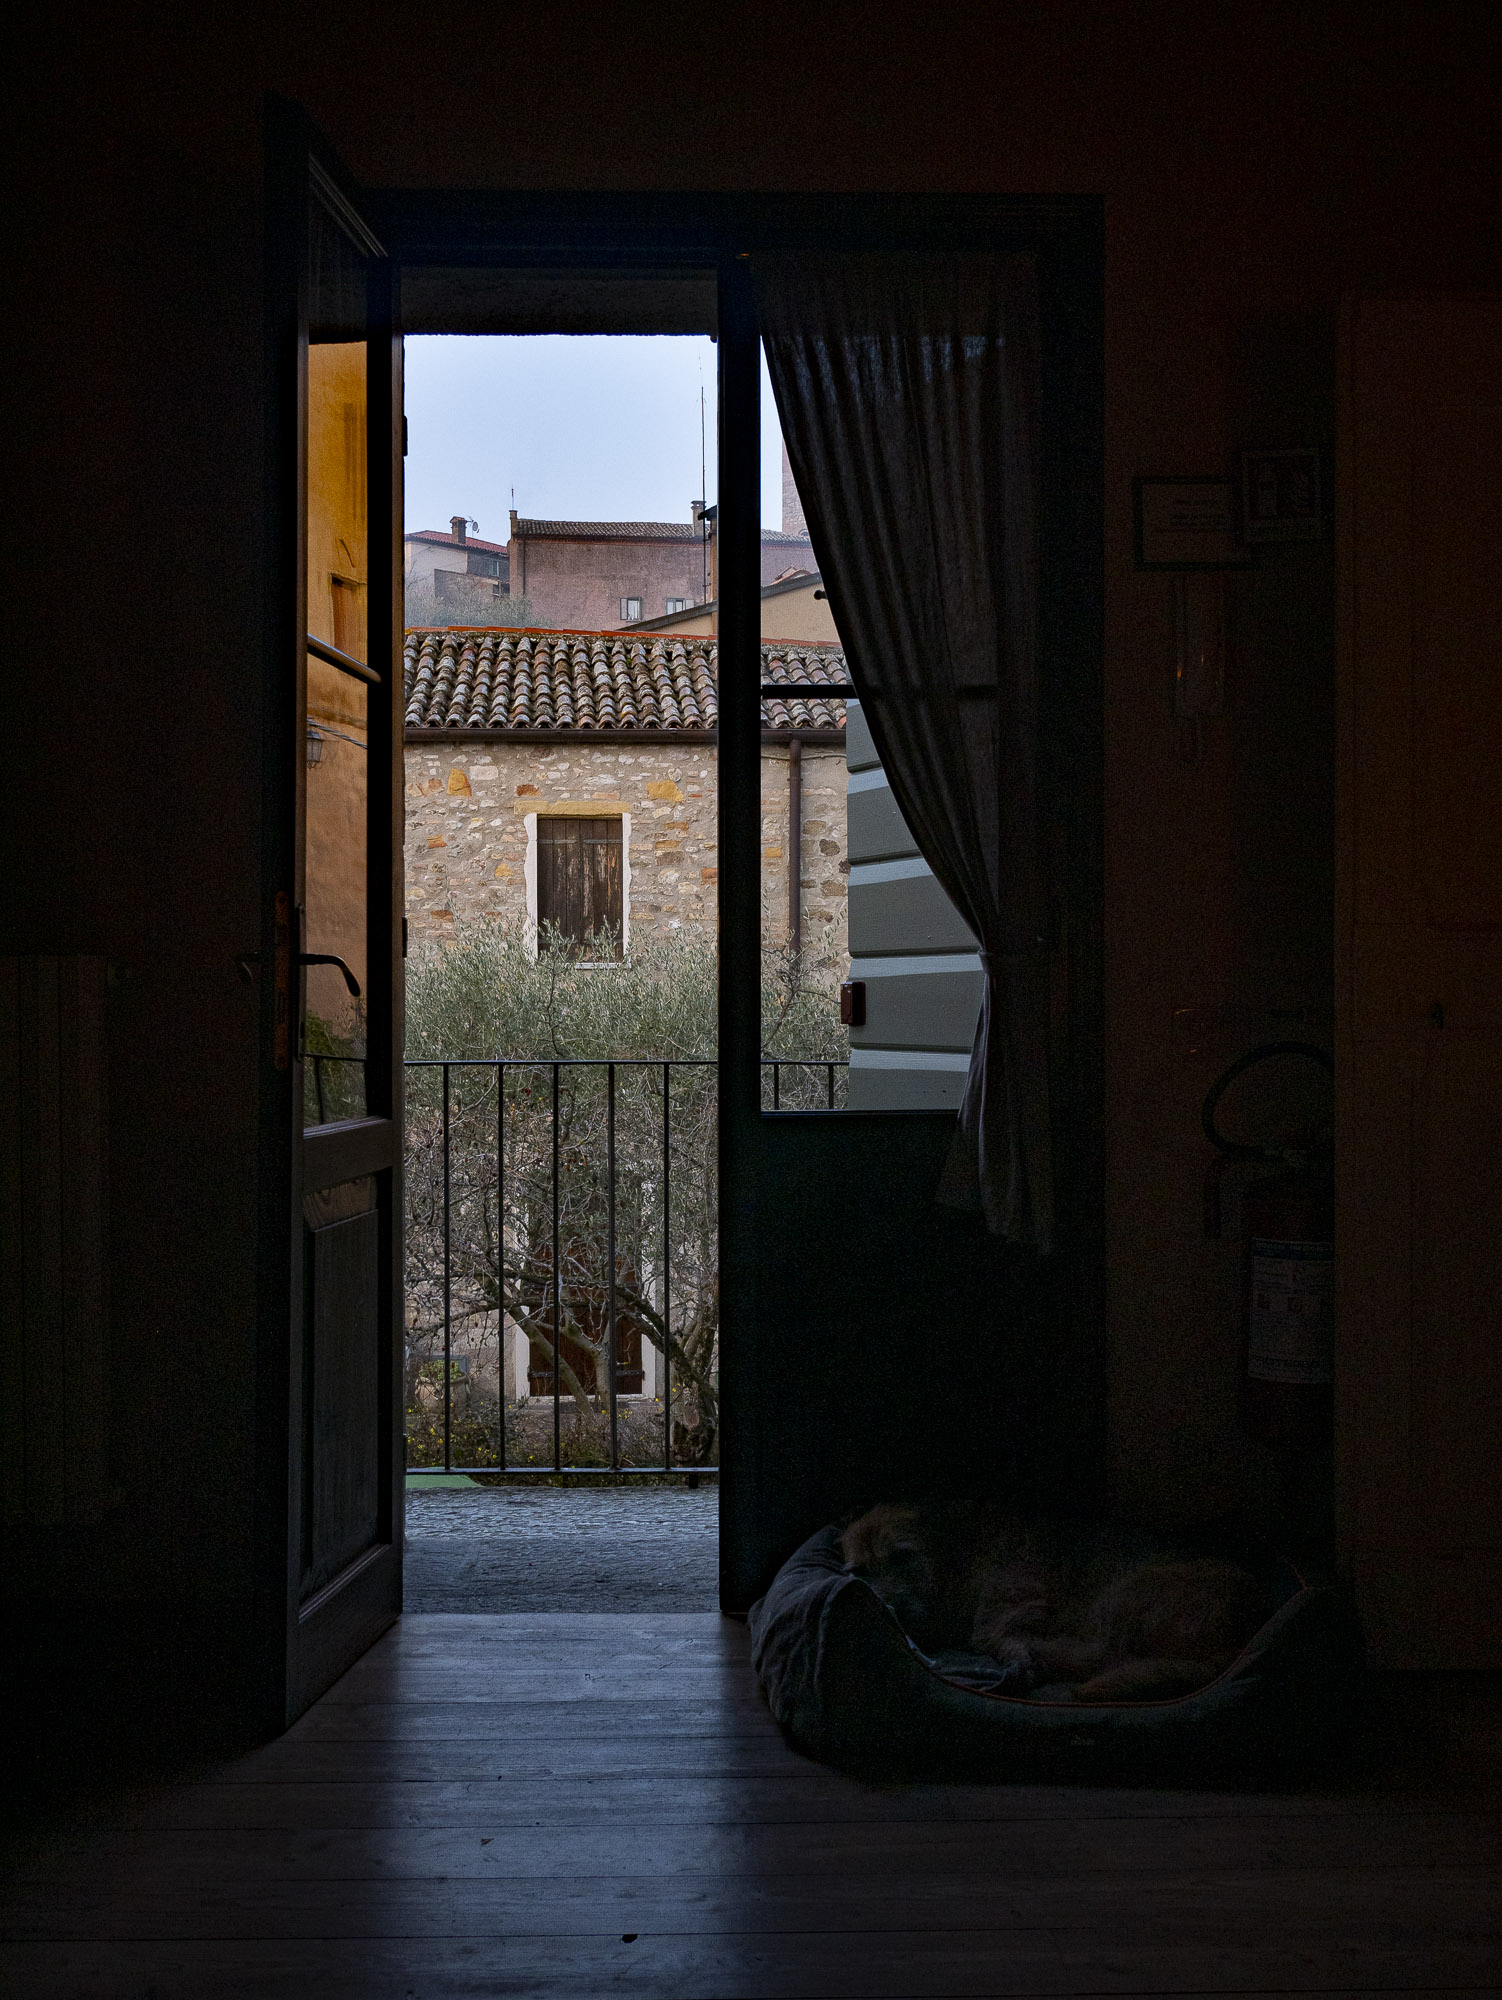 Arqua Petrarca, Italy, Photography, Jarred Elrod